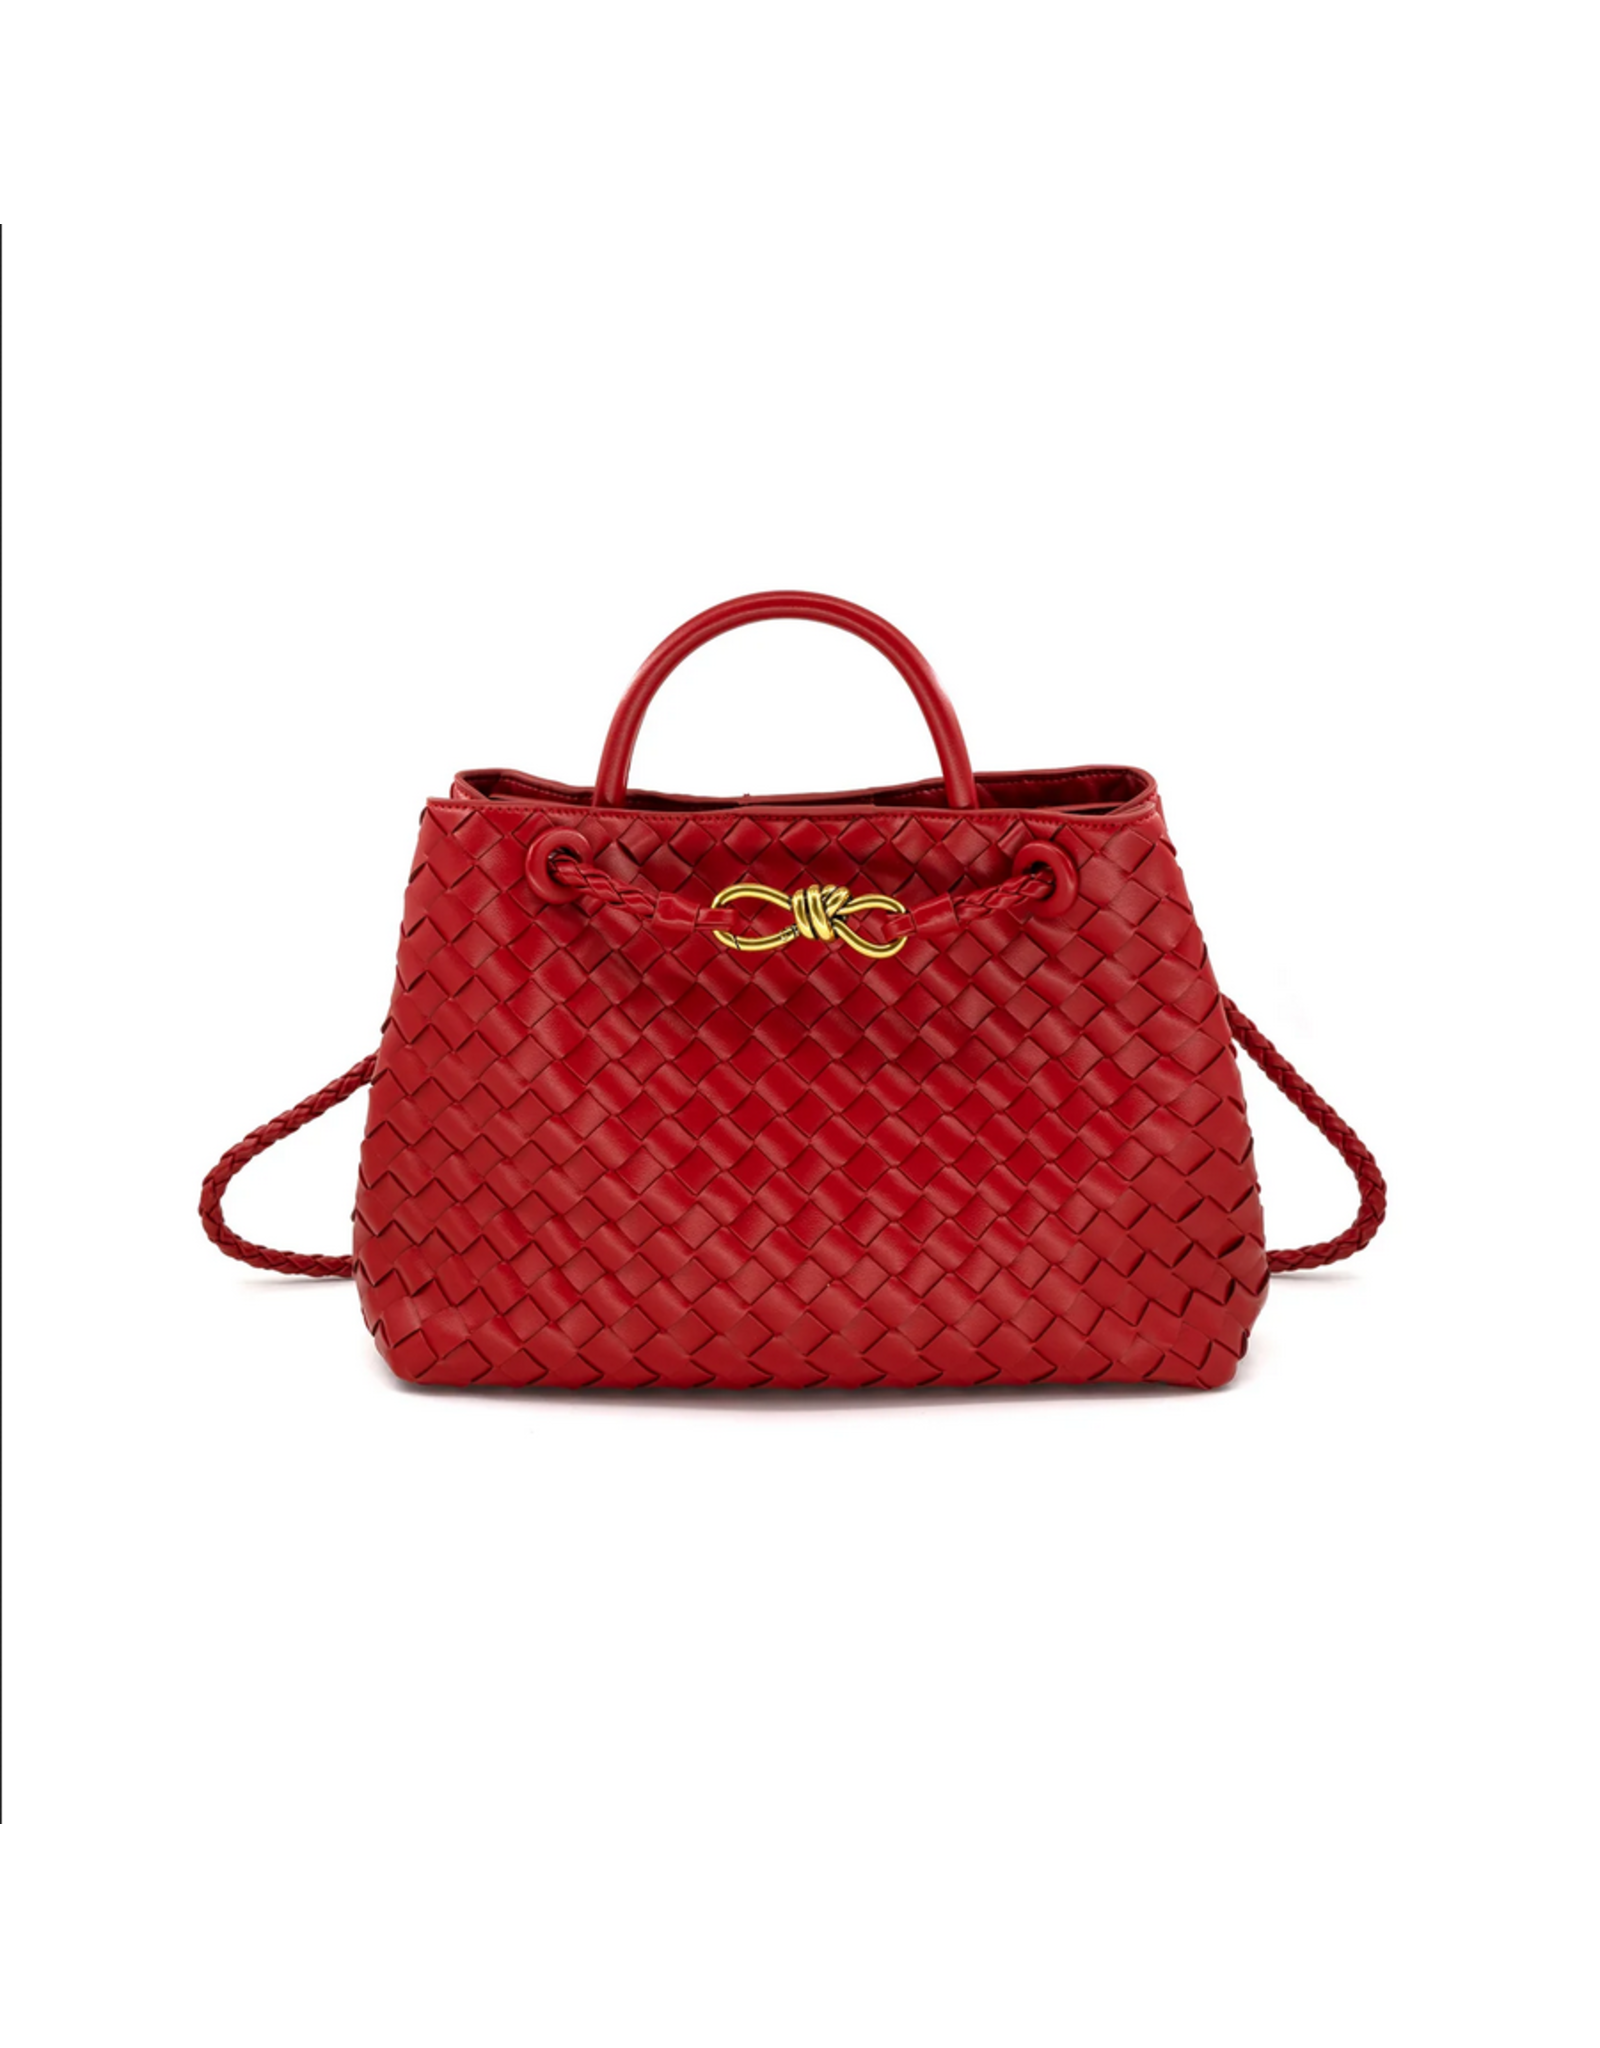 BC Handbags Talene Woven Satchel Bag